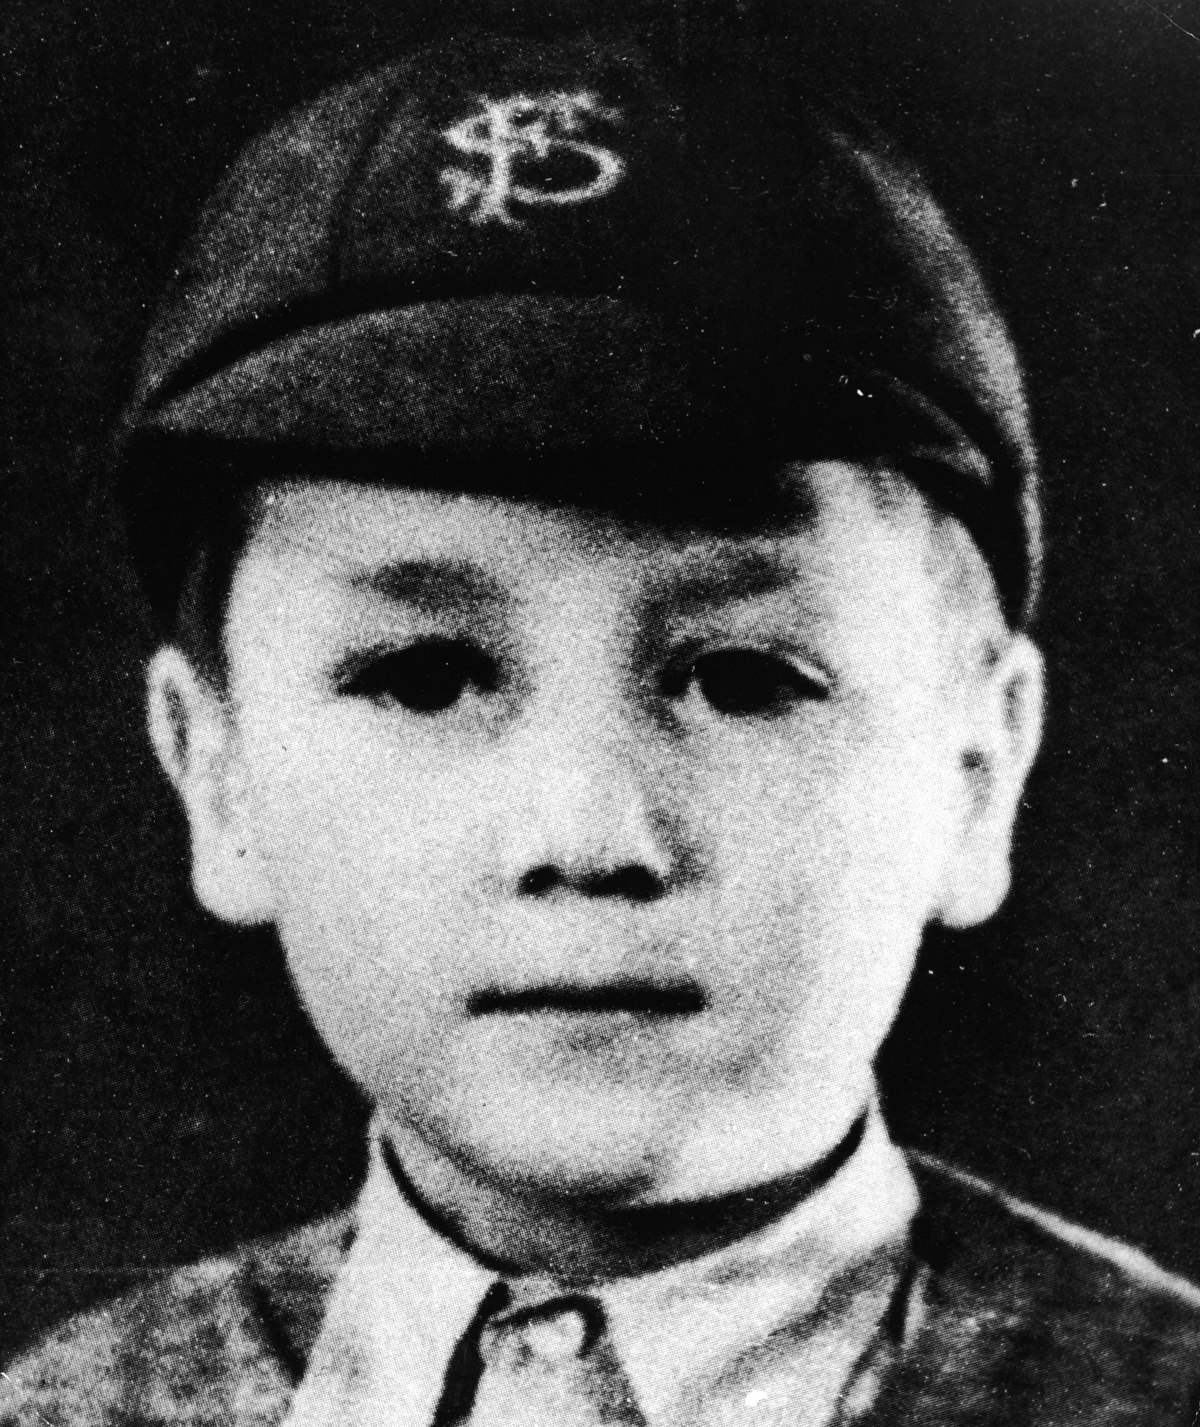 John Lennon als 8-Jähriger, in Schuluniform mit Kappe. Fotografiert 1948. (Photo by Pictorial Press/Getty Images)